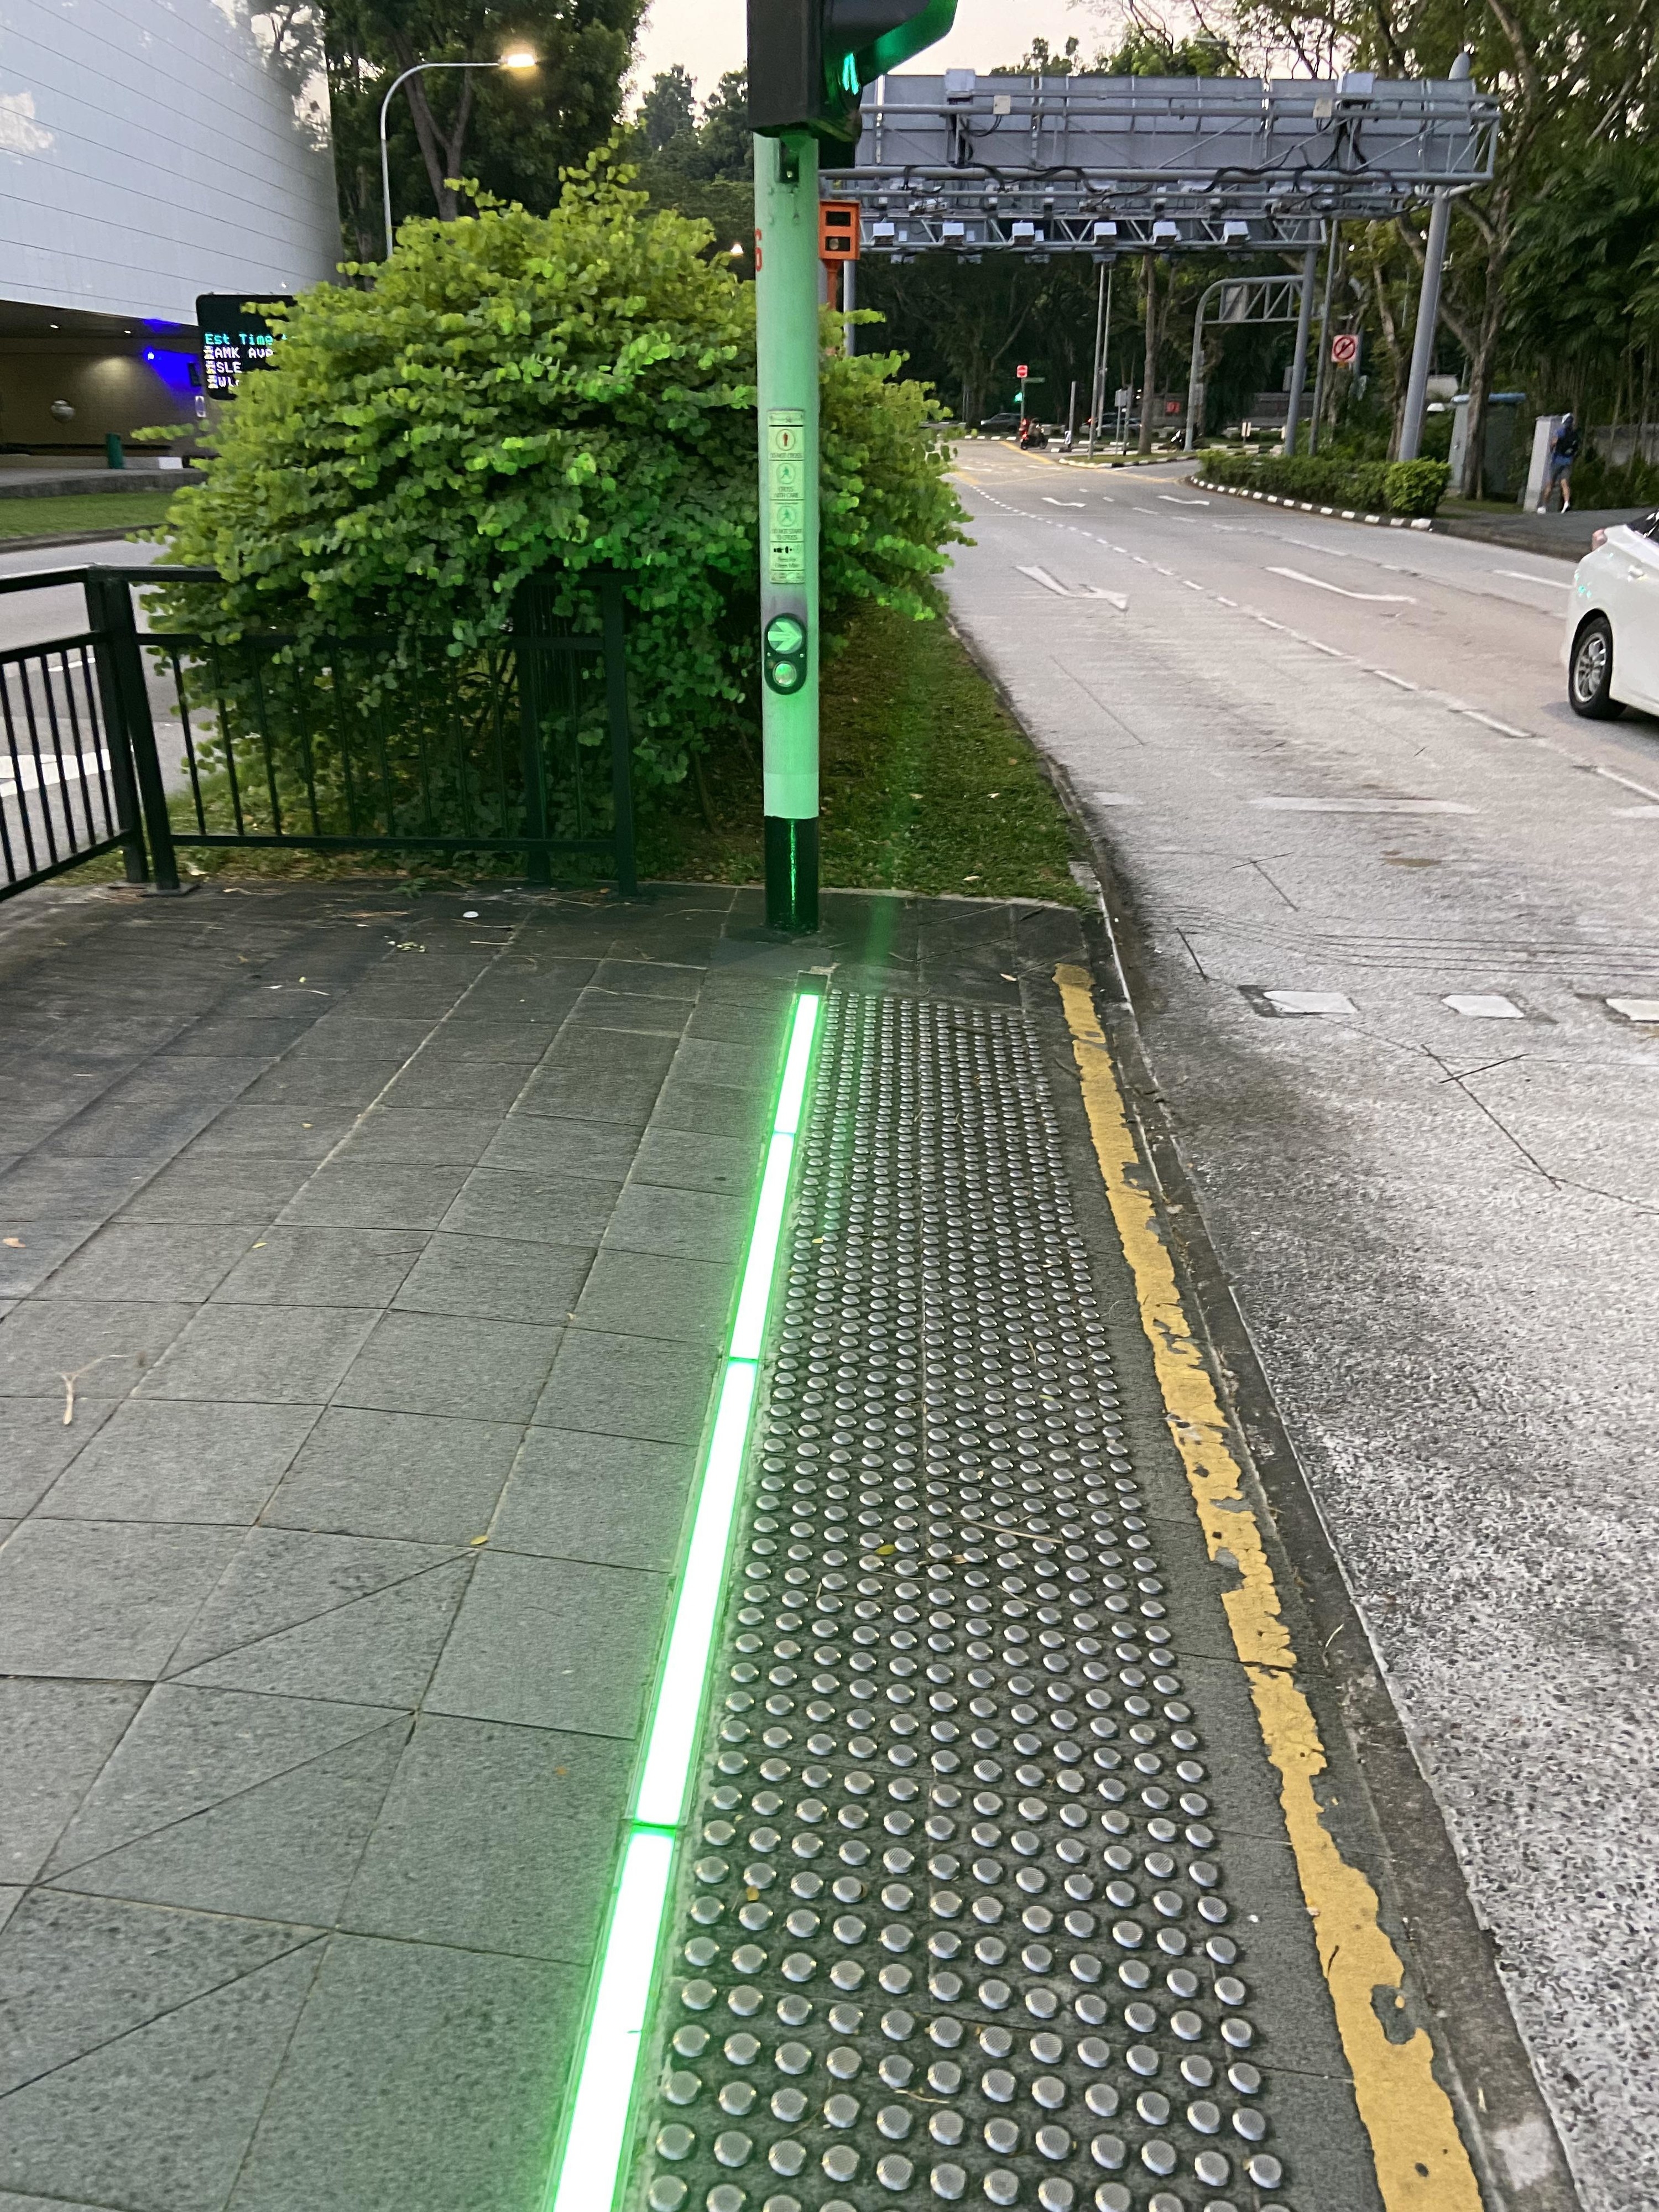 Lights on the ground of a crosswalk